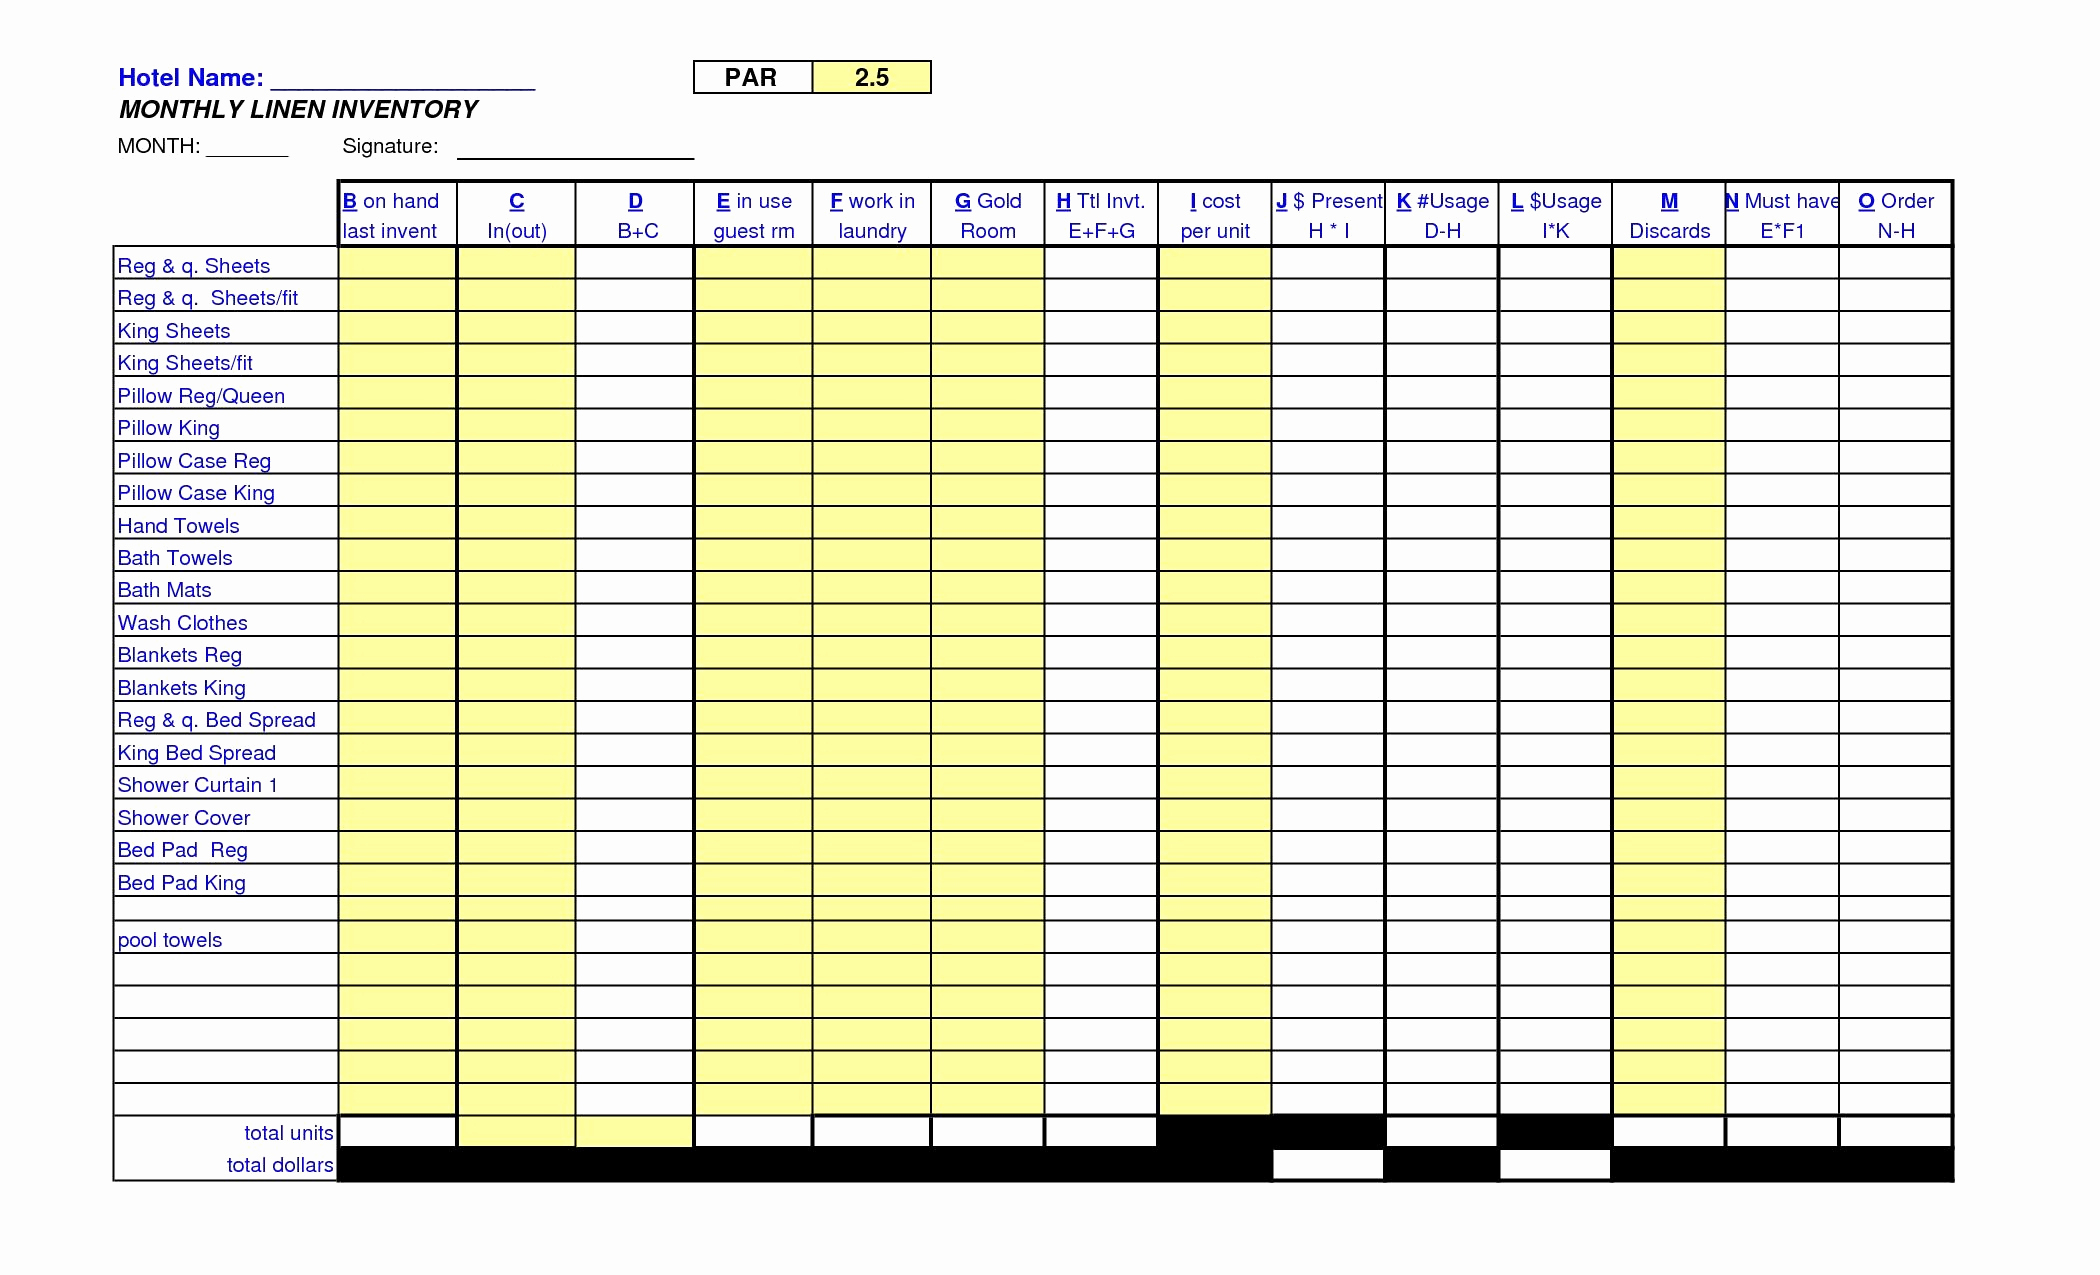 Hotel Inventory Spreadsheet Best Of Hotel Linen Inventory Throughout Hotel Inventory Spreadsheet